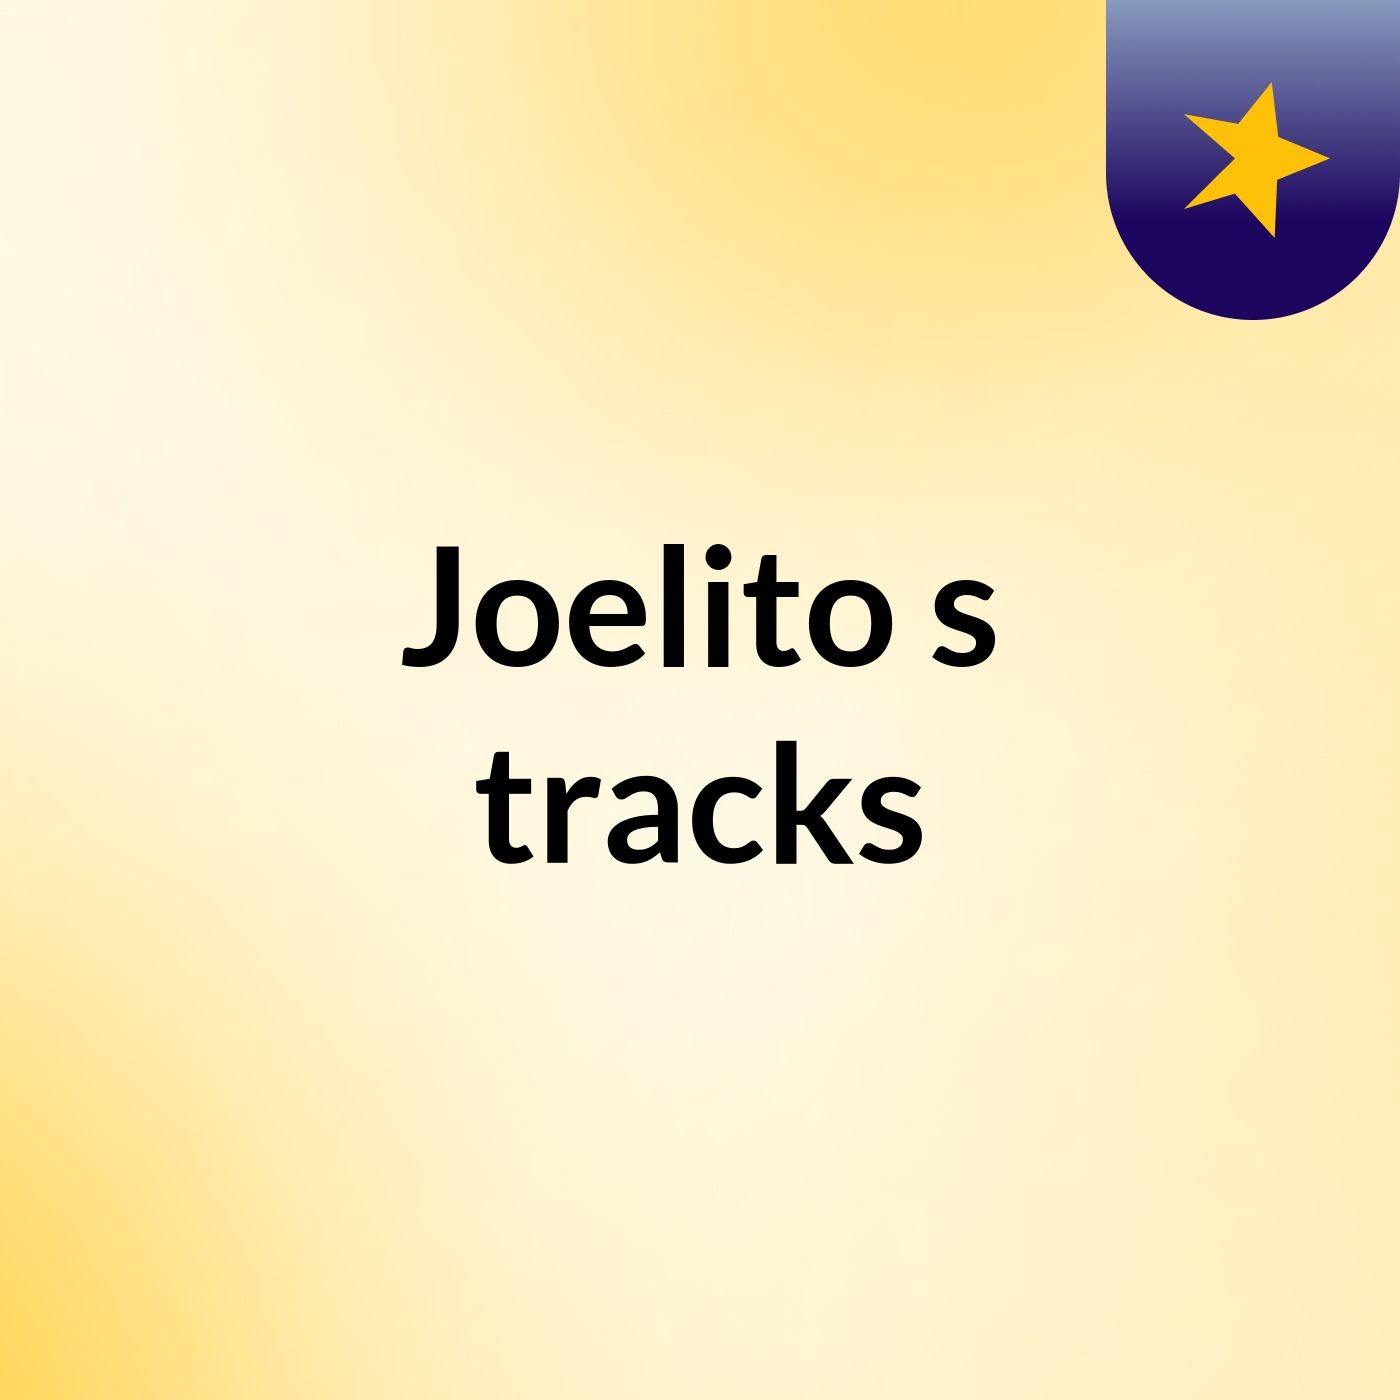 Joelito's tracks